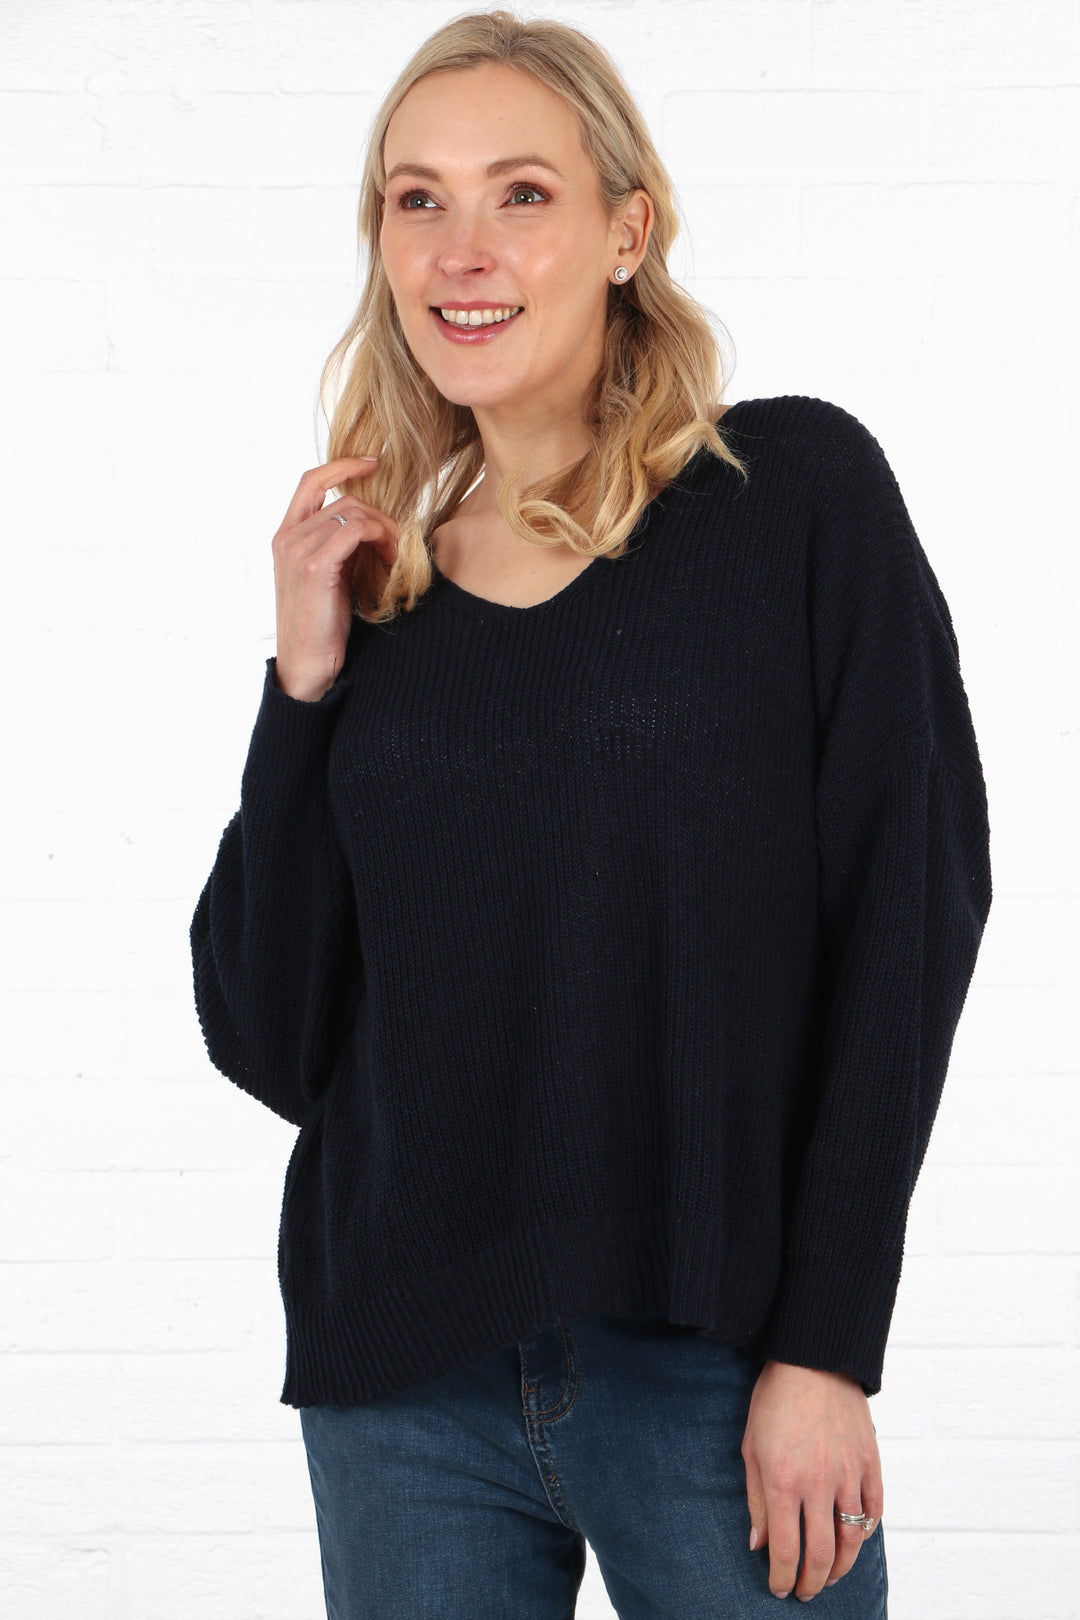 model wearing a plain navy blue knitted cotton jumper